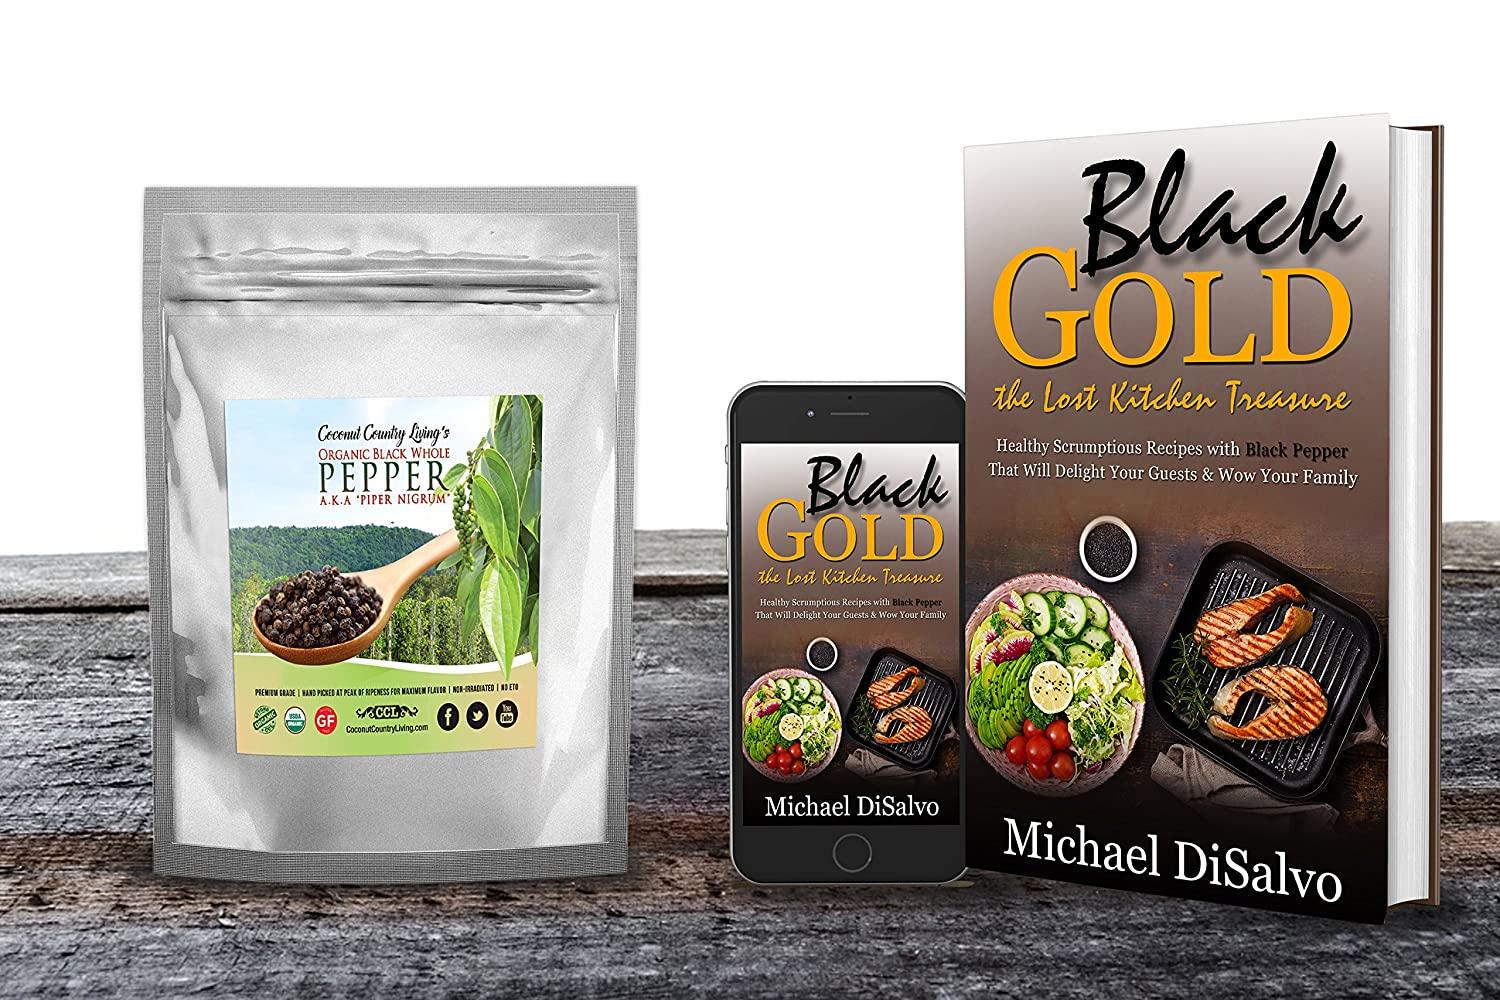 Organic Whole Black Peppercorns - Fair Trade Premium Whole Black